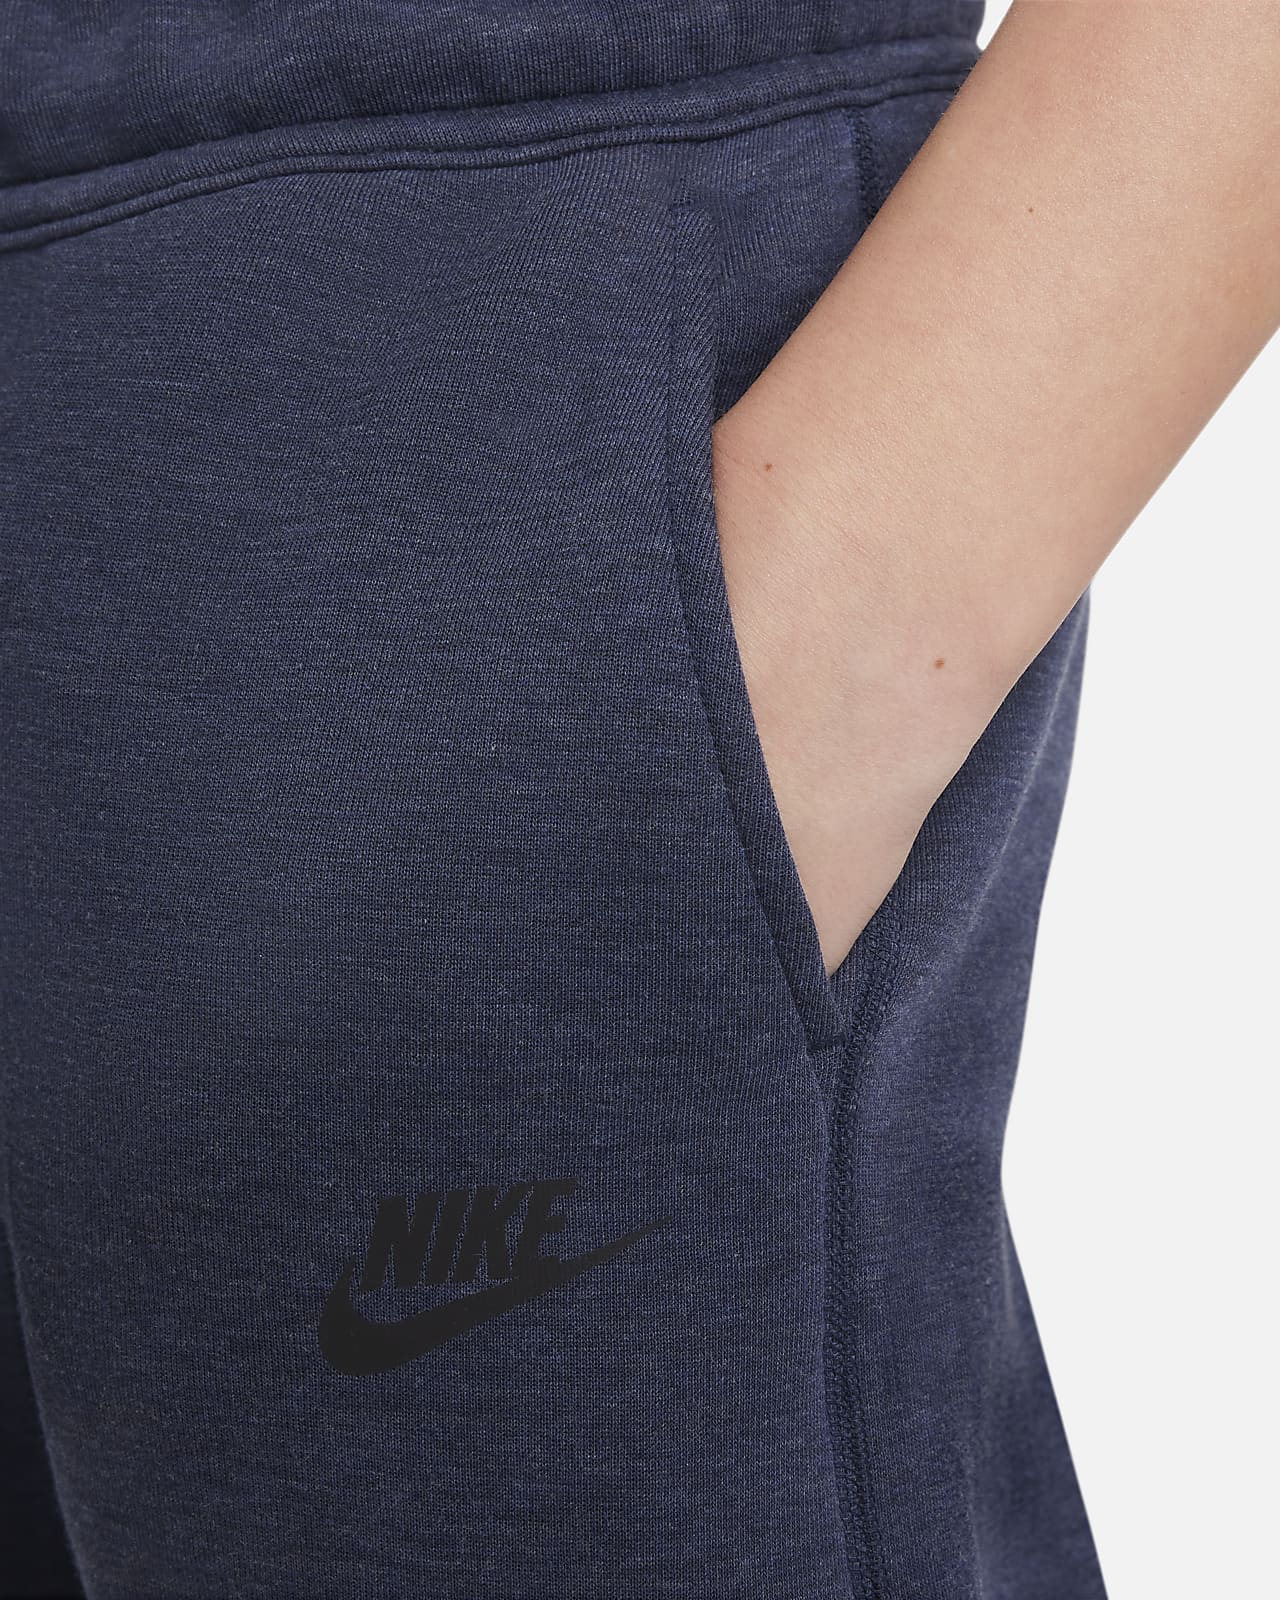 Nike Sportswear Junior Boys' Tech Fleece Pants Dark Grey Heather / Black